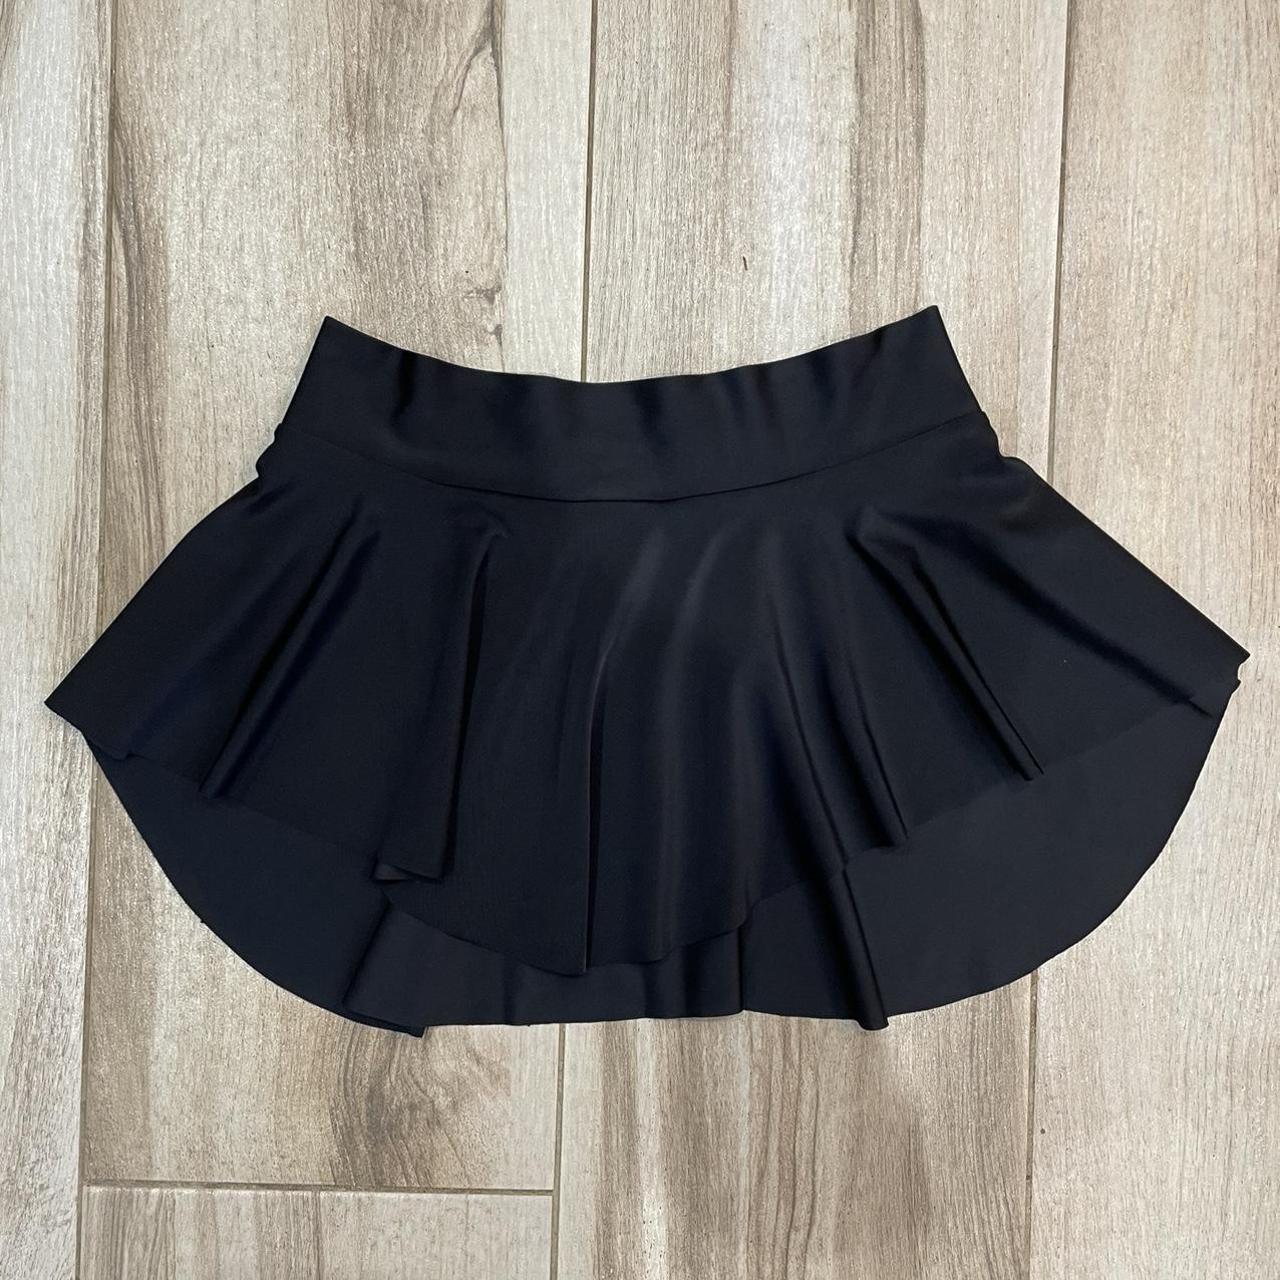 Sab black ballet skirt Brand new Size 8/10 U.K.... - Depop